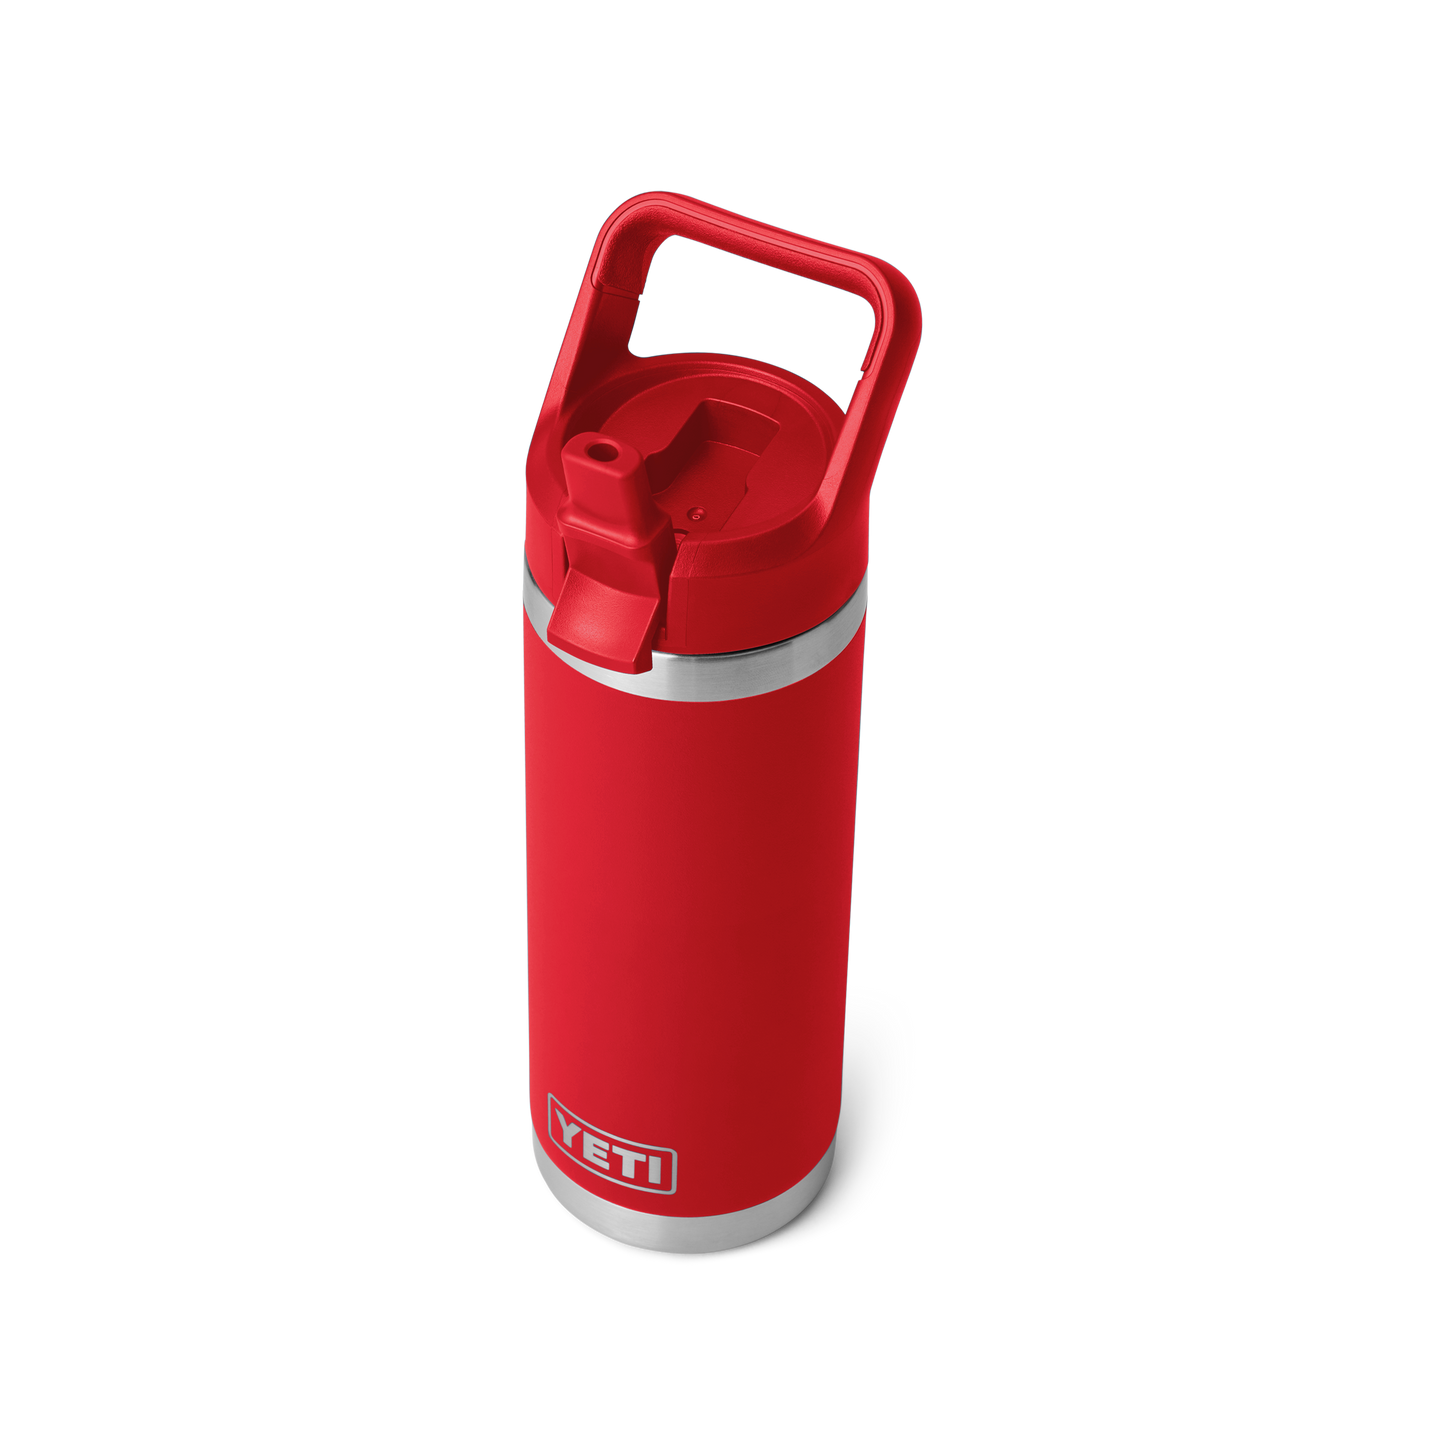 YETI 18 oz (532 ML) Straw Bottle Rescue Red